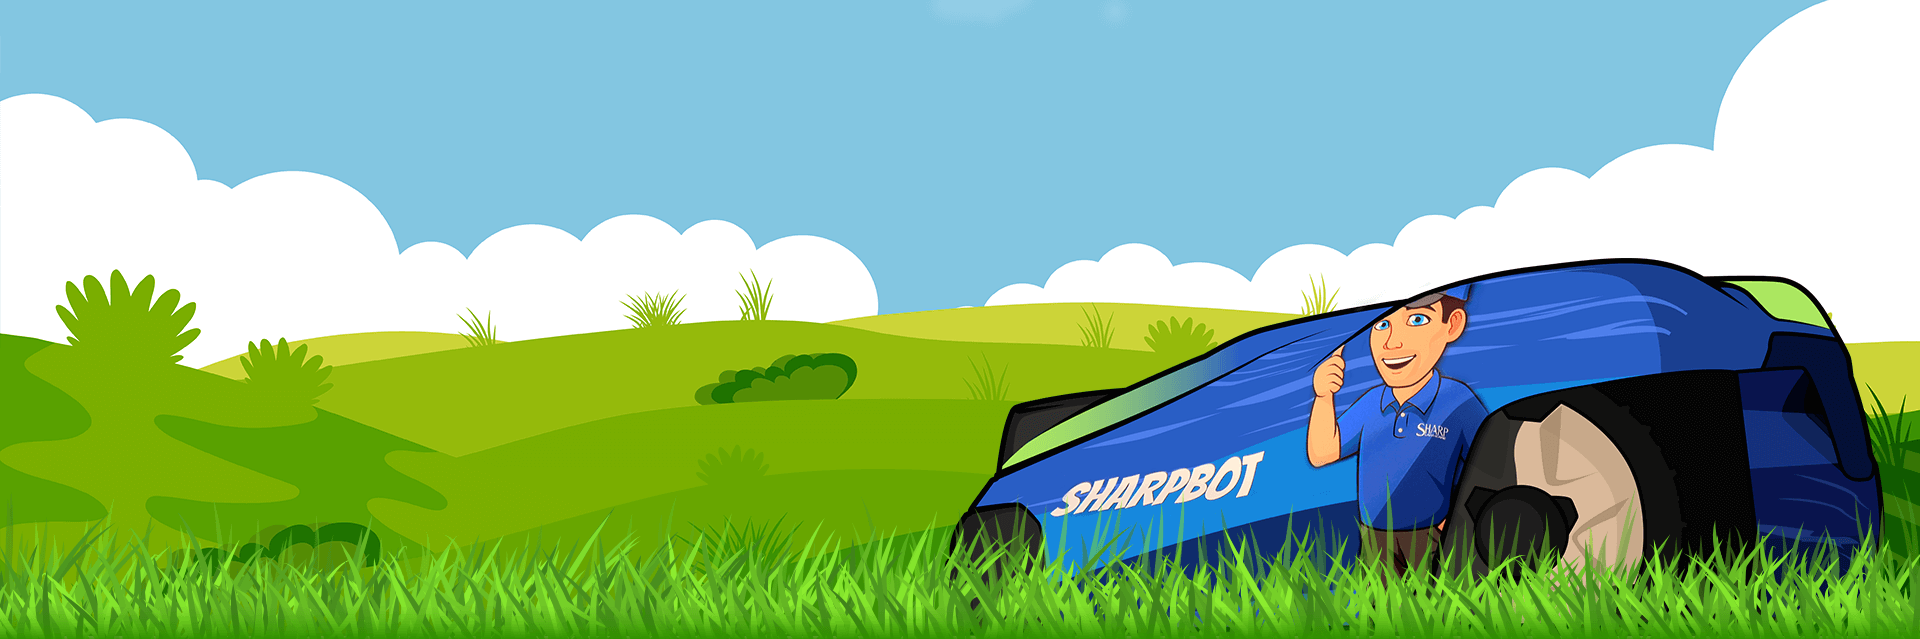 SharpBot graphic in lawn.